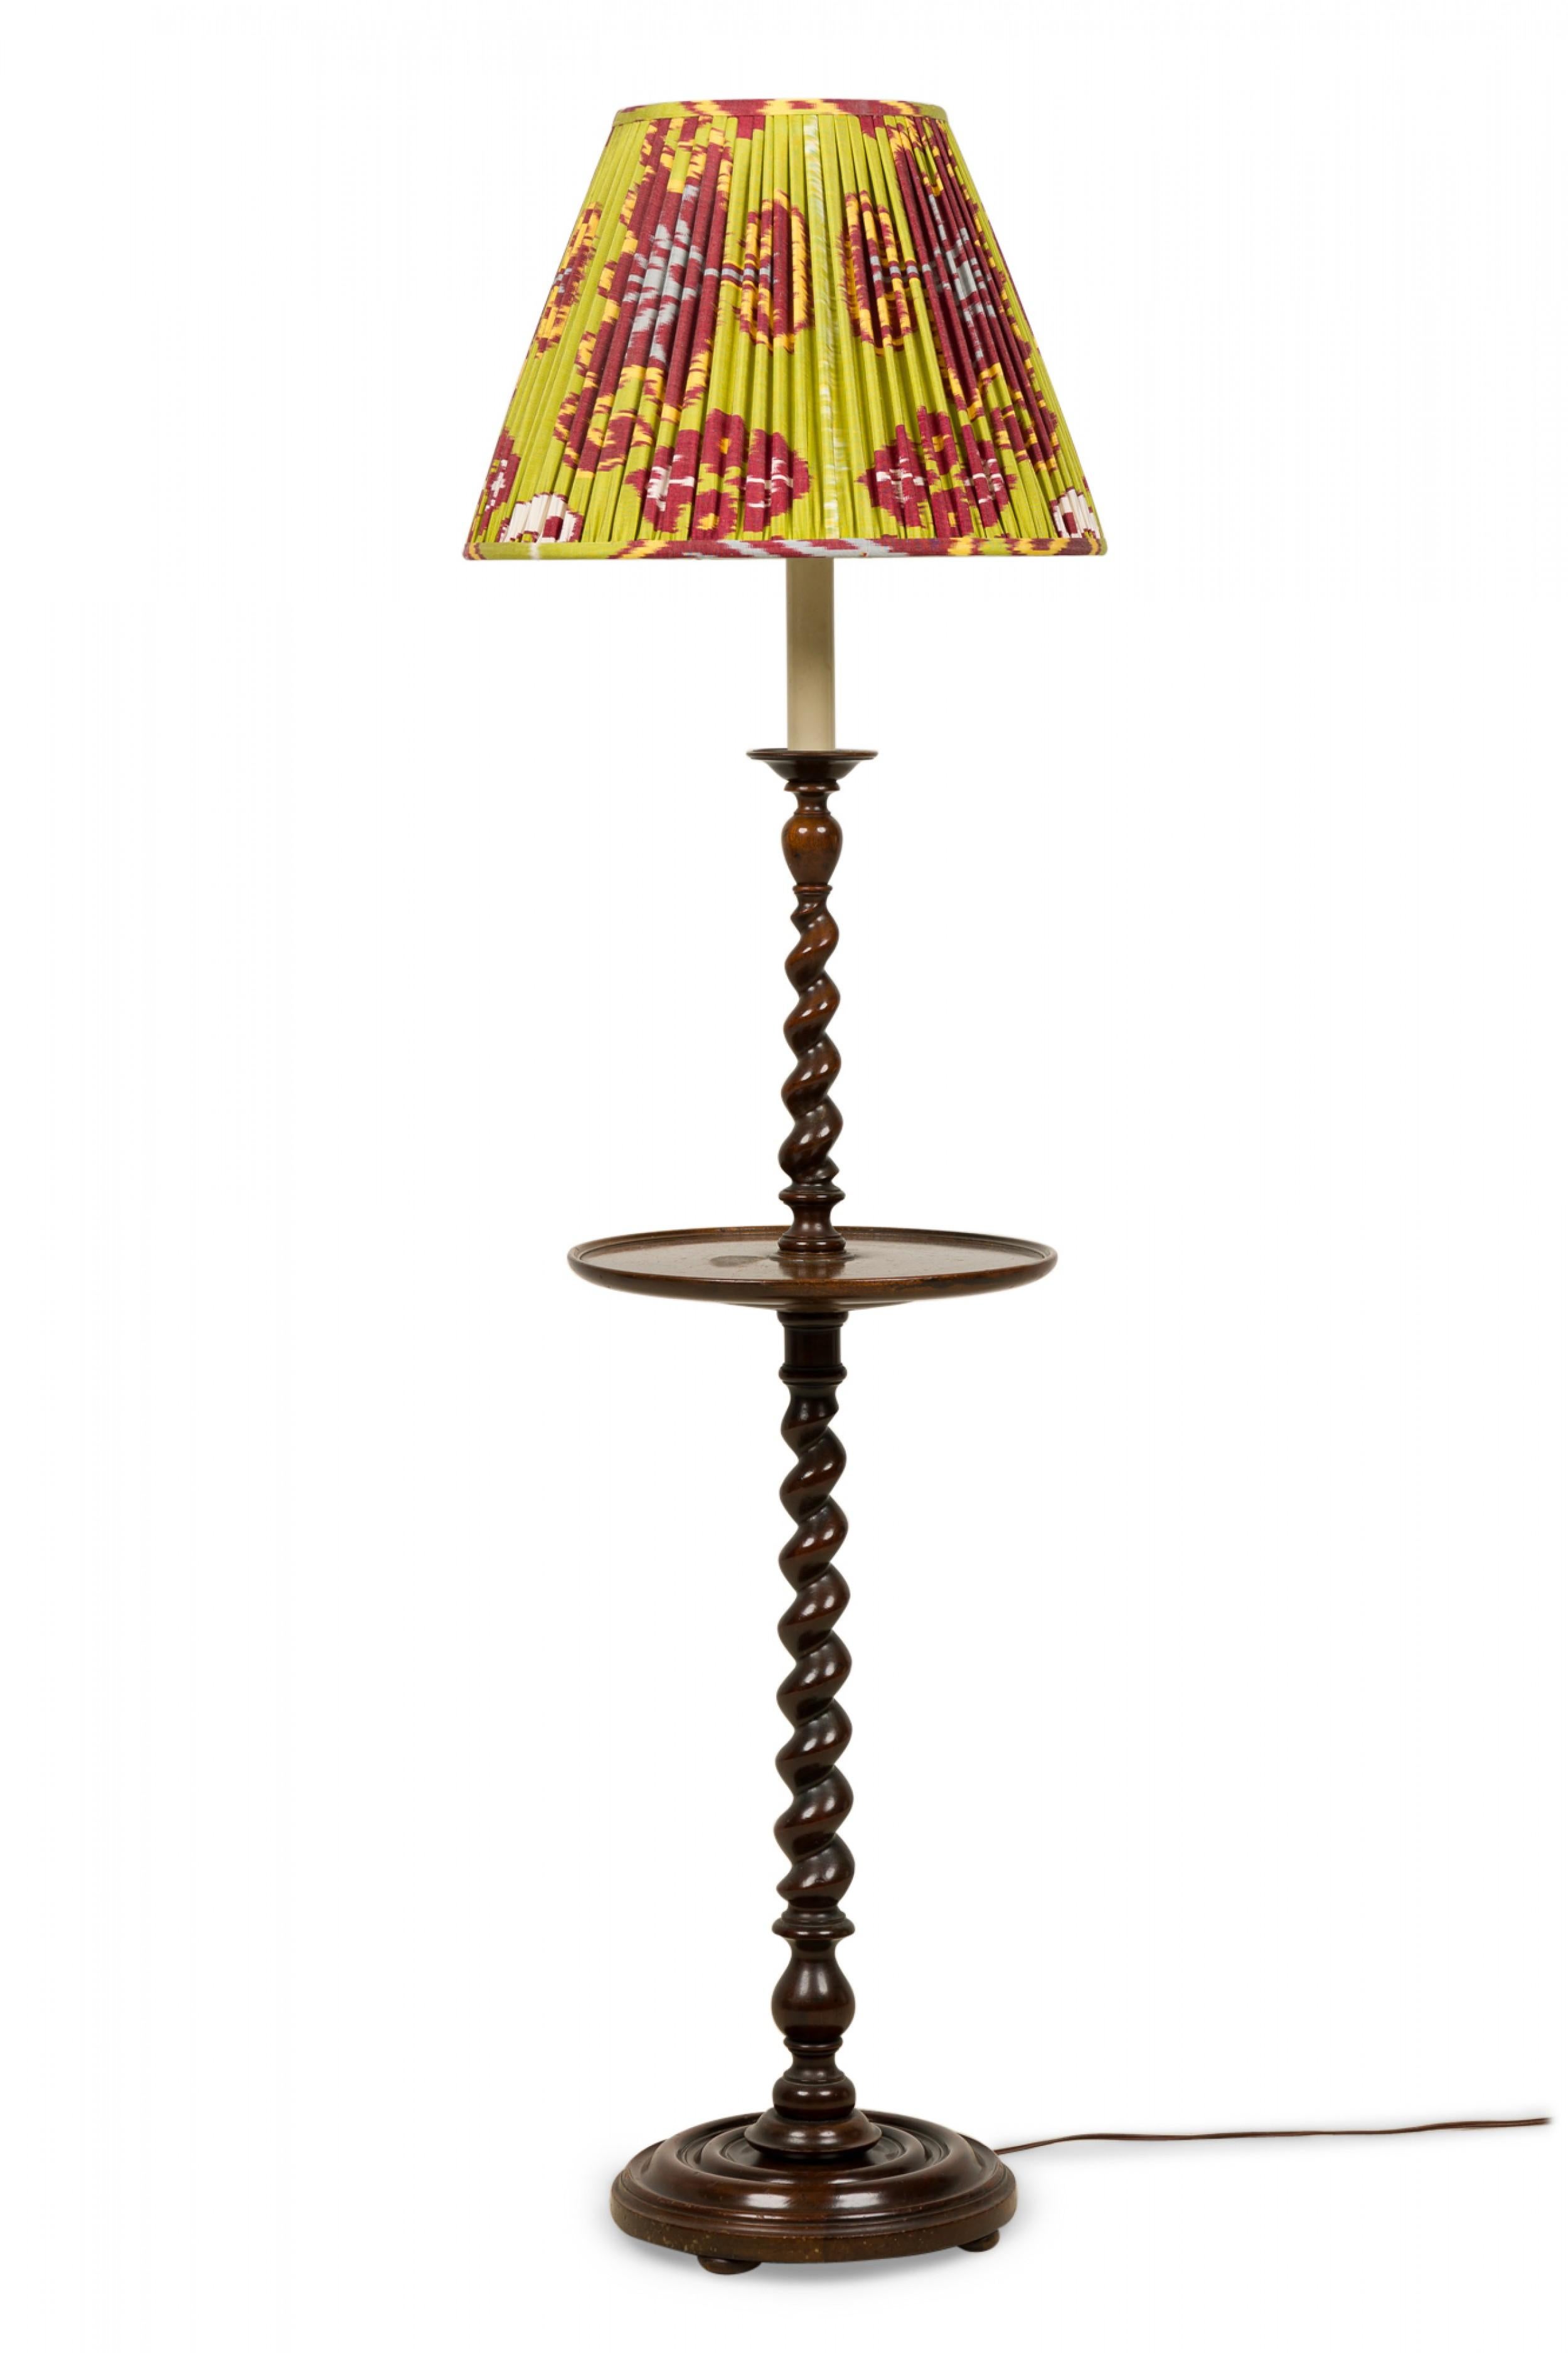 wooden spindle floor lamp